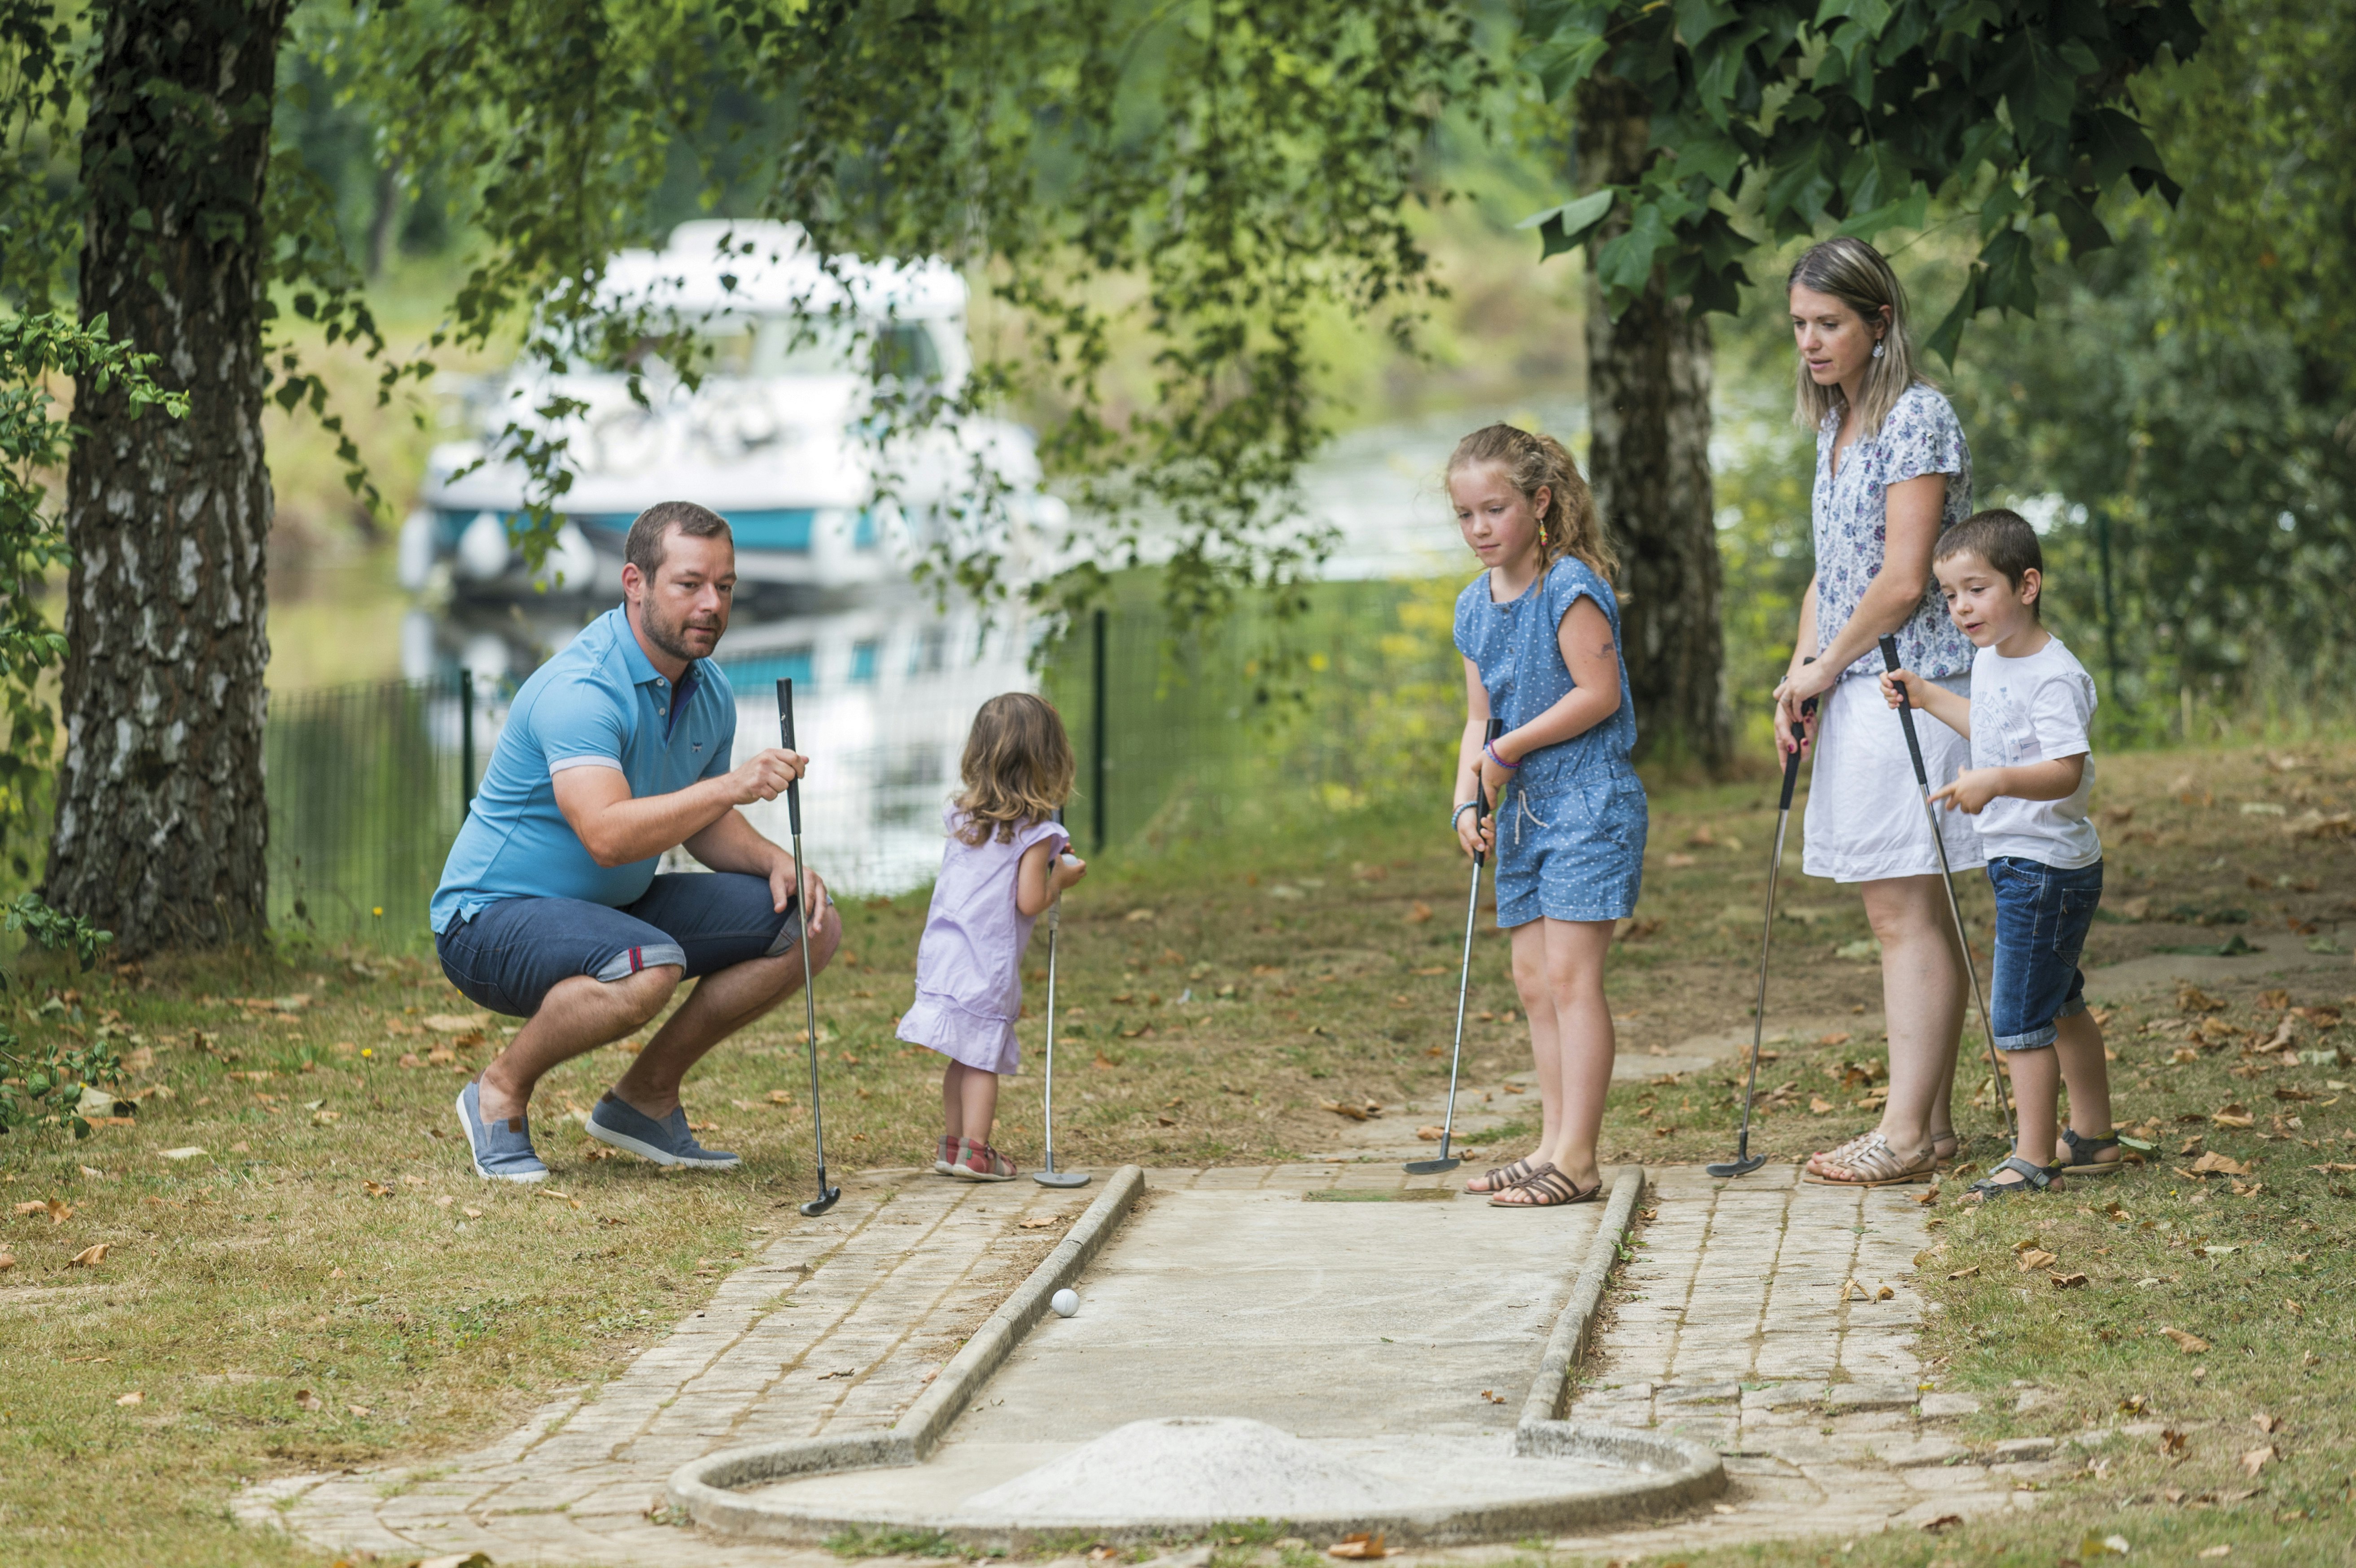 Obitelj igra mini golf s vodenim kanalom i čamcem u pozadini